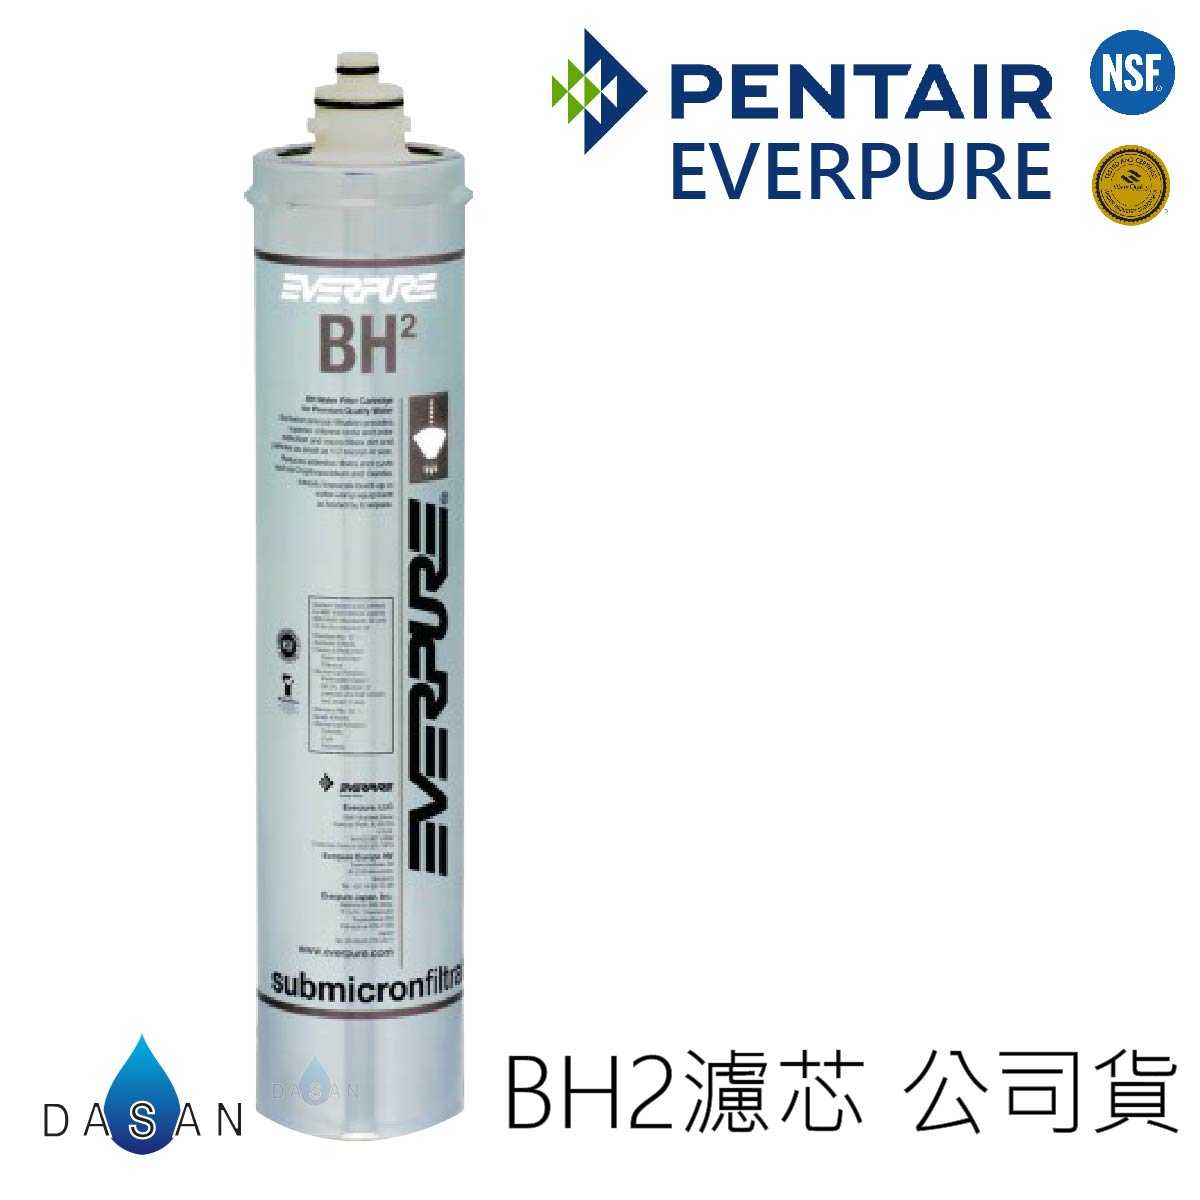 【EVERPURE】BH2 美國原裝 公司貨 Pentair Everpure 銀離子抑菌 複磷酸鹽